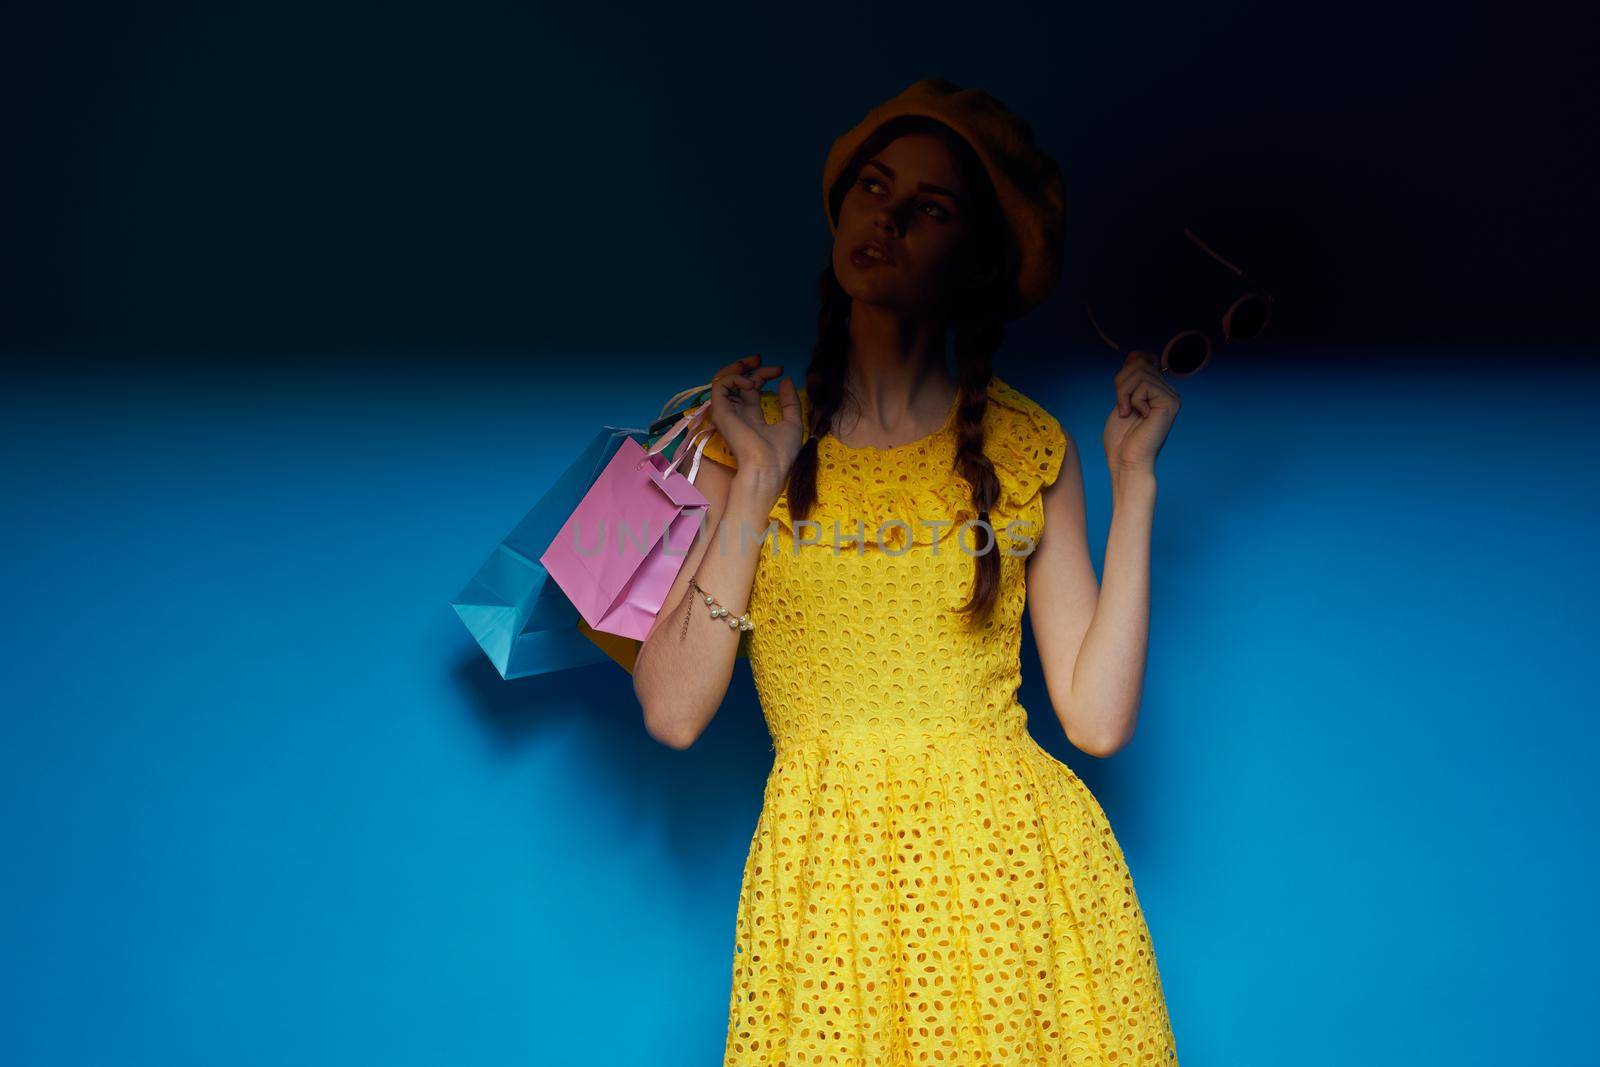 pretty woman in a yellow hat Shopaholic fashion style studio model. High quality photo